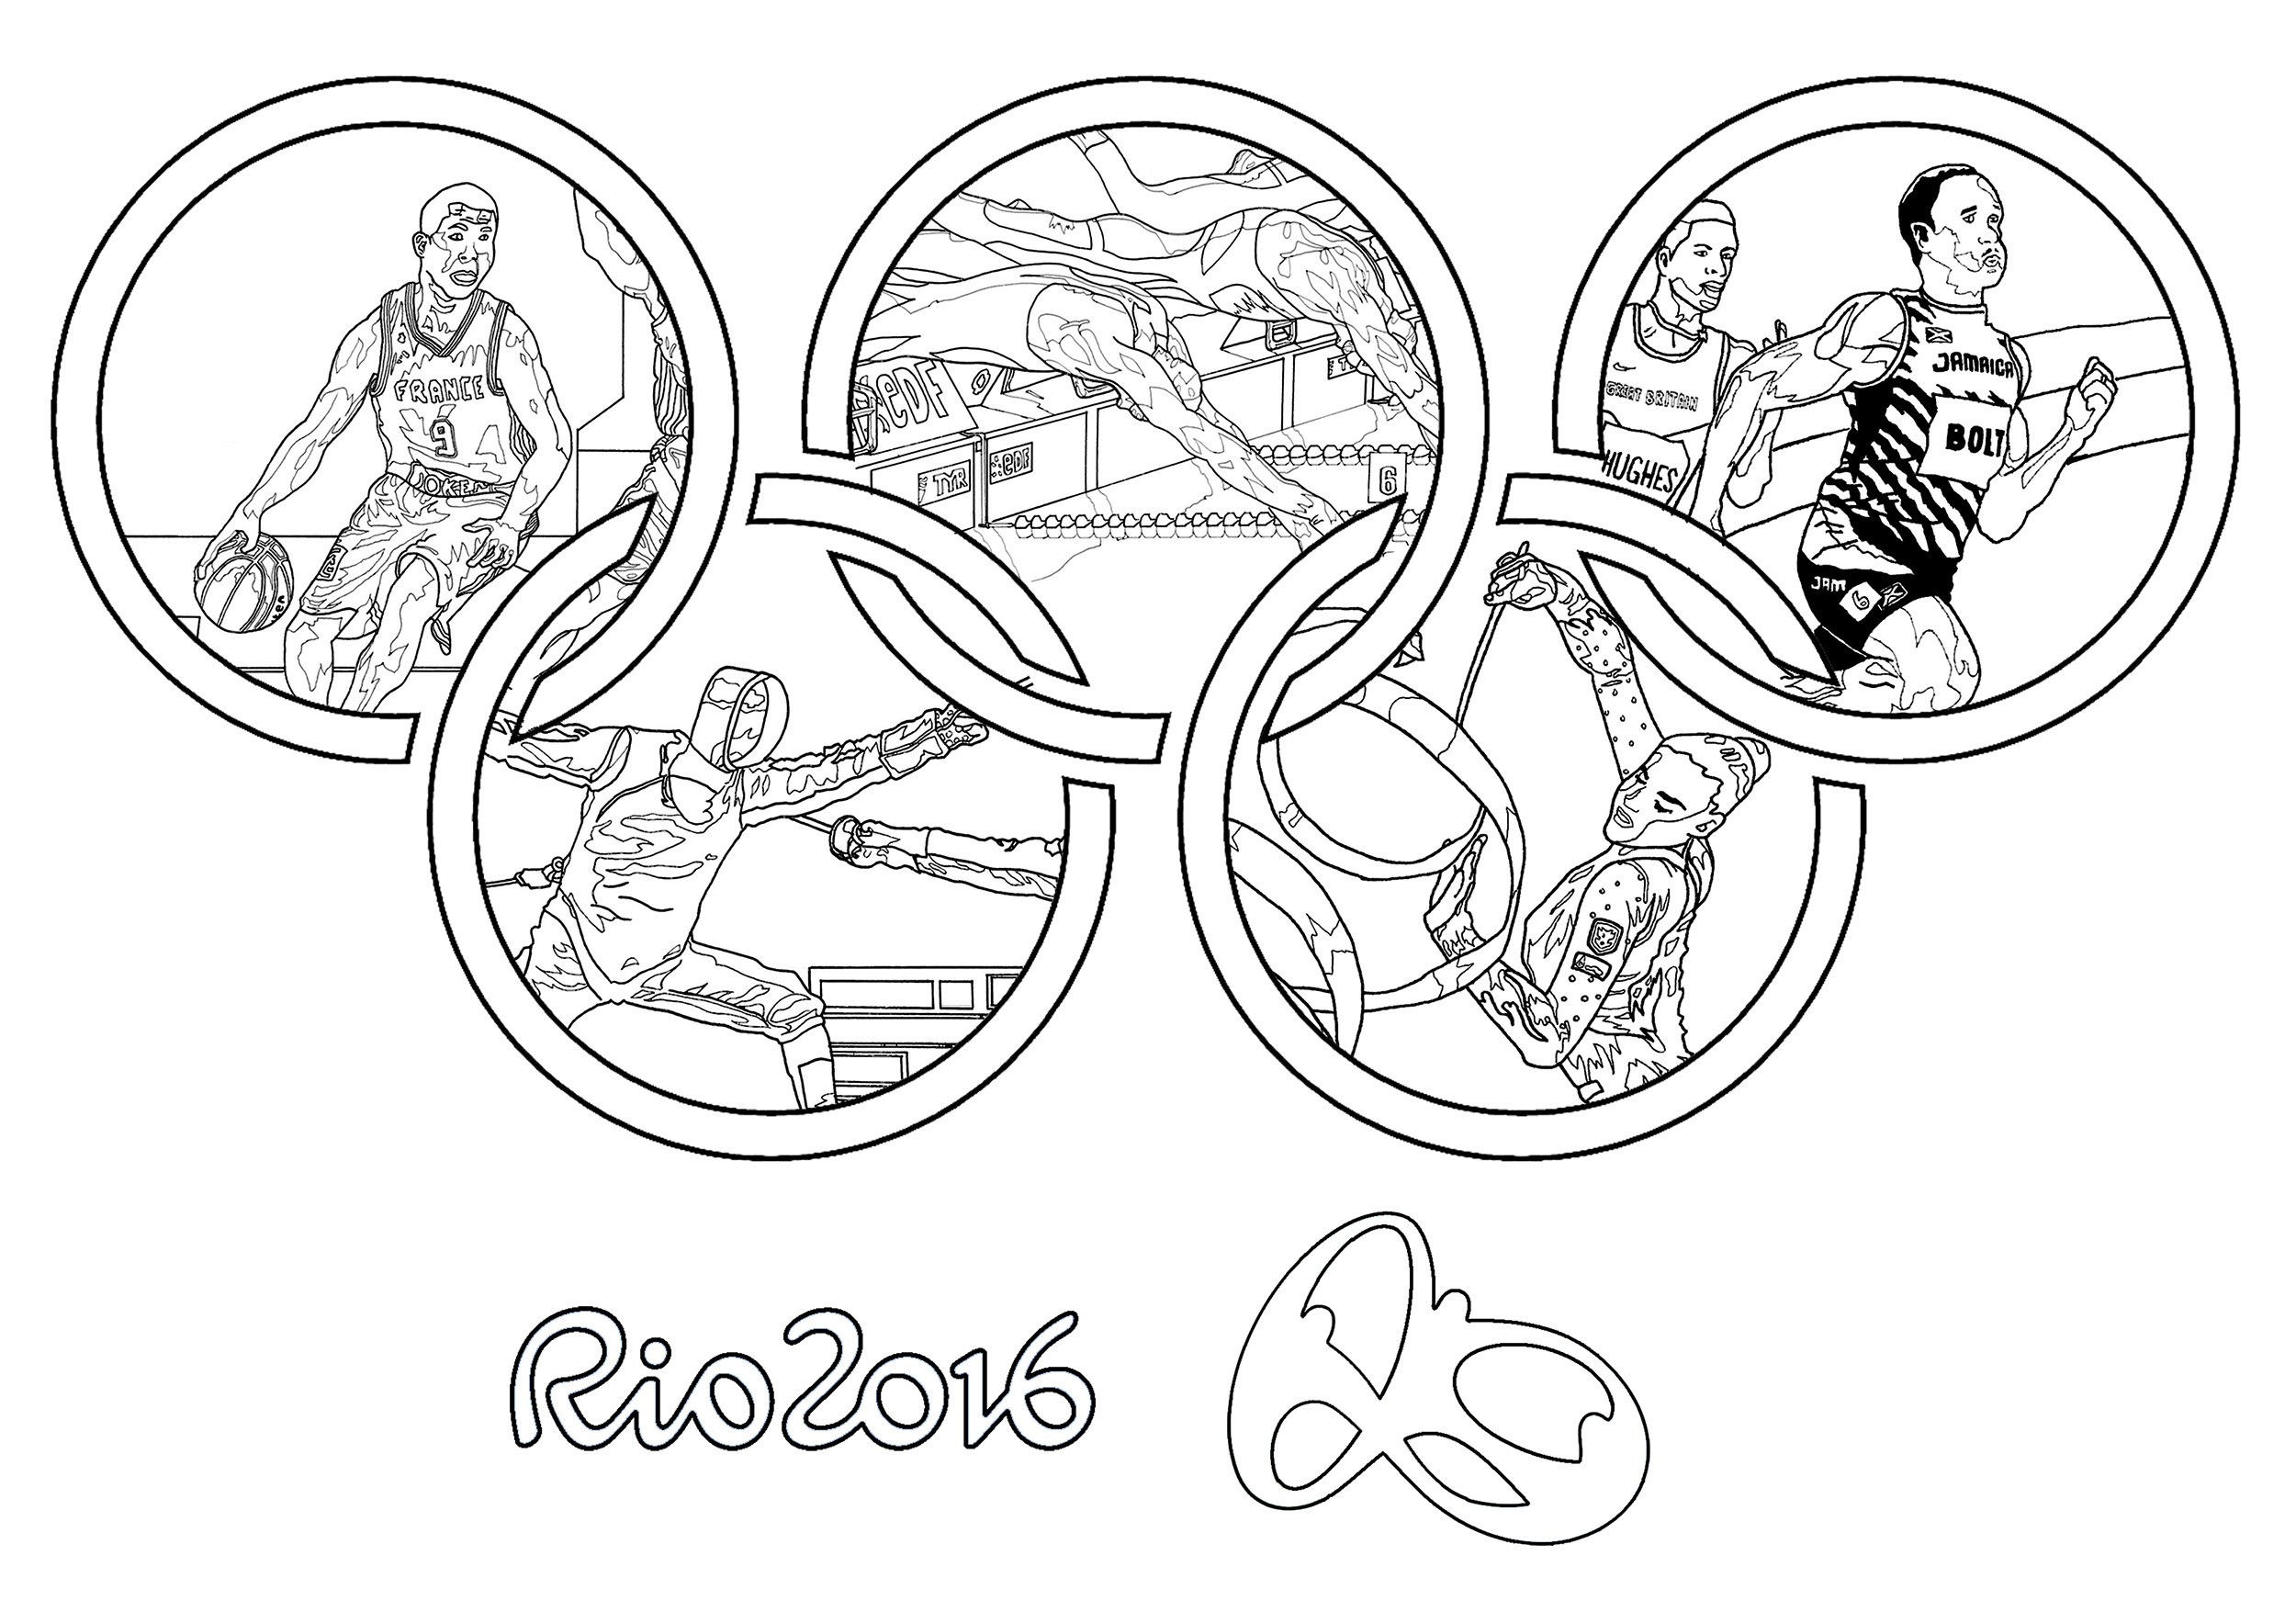 Coloriage jogos Olímpicos Rio 2016 : 5 sports